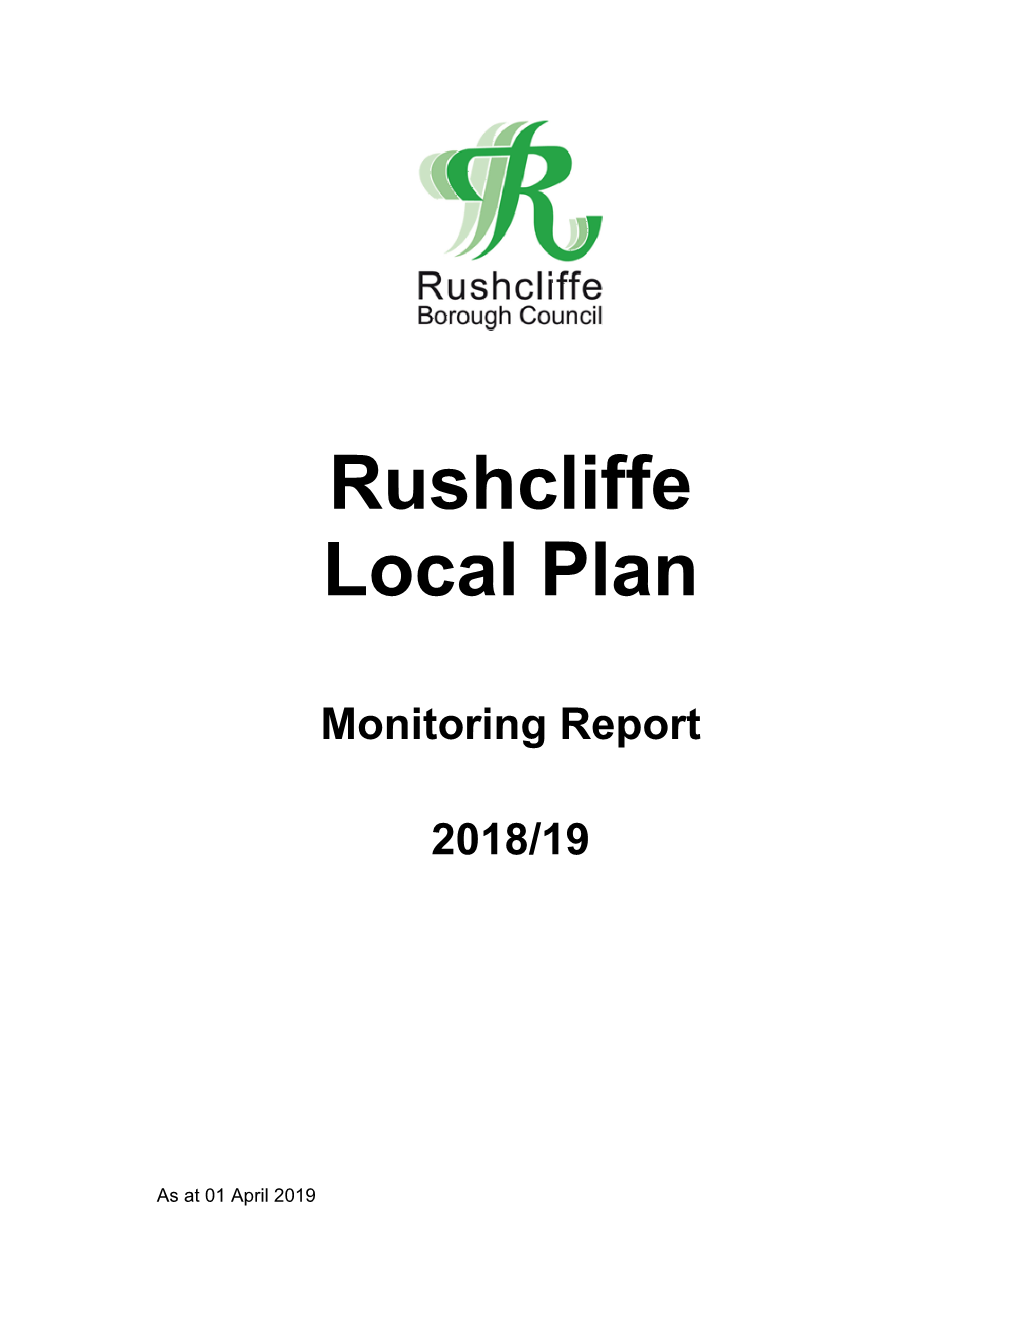 Rushcliffe Local Plan